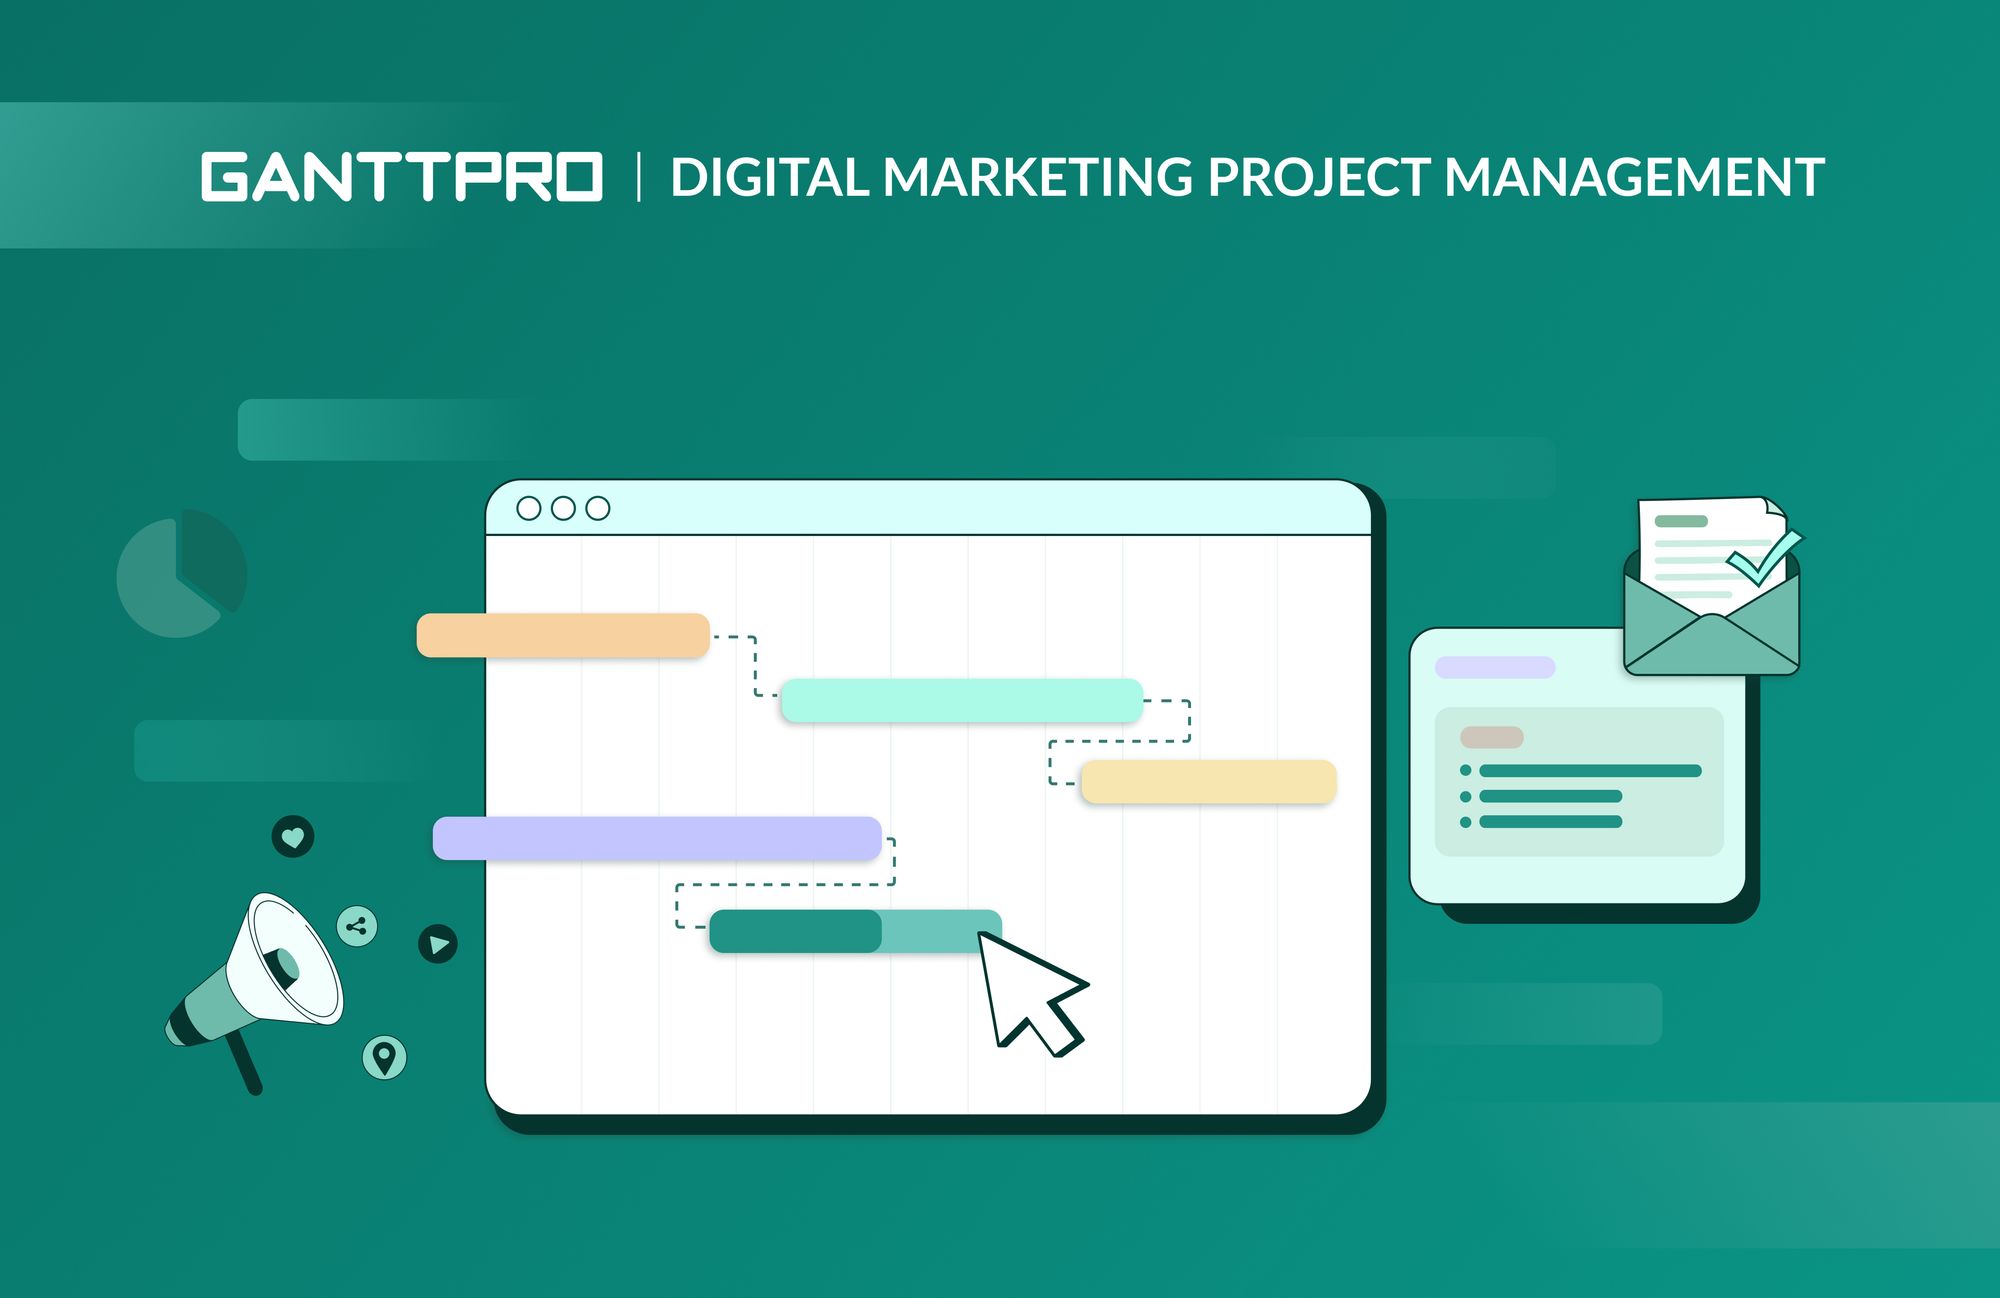 Digital marketing project management guide